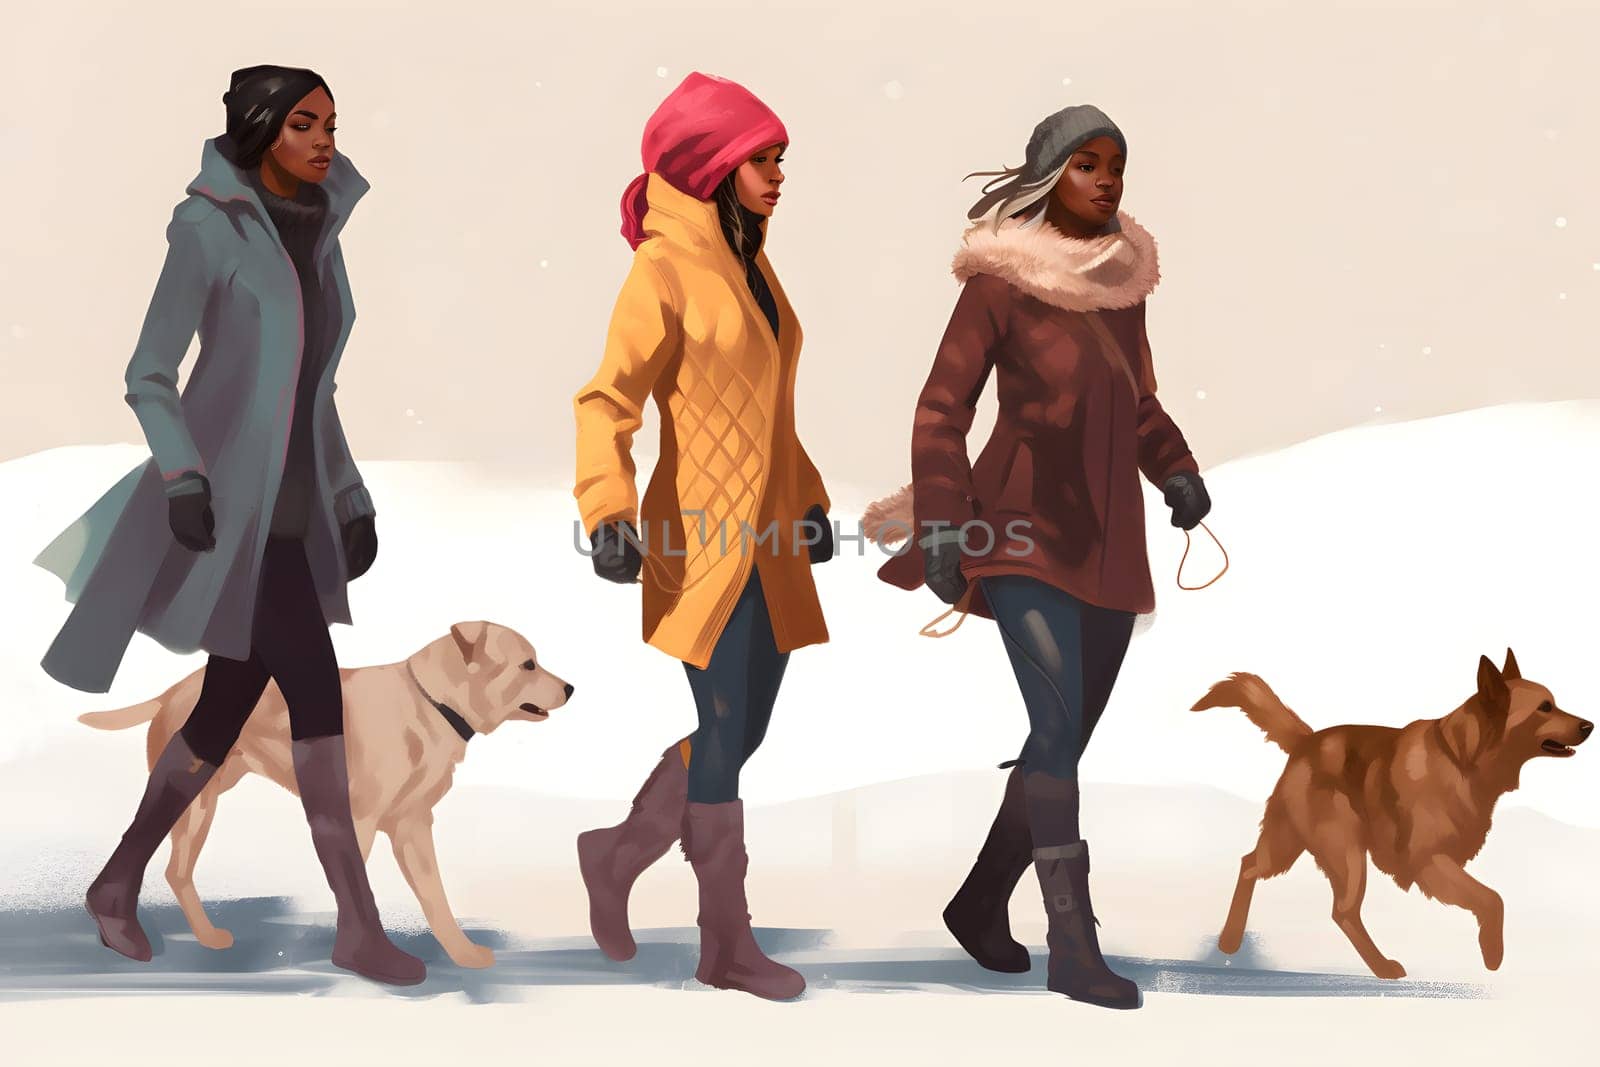 african amercian women walking dog at winter, neural network generated art by z1b